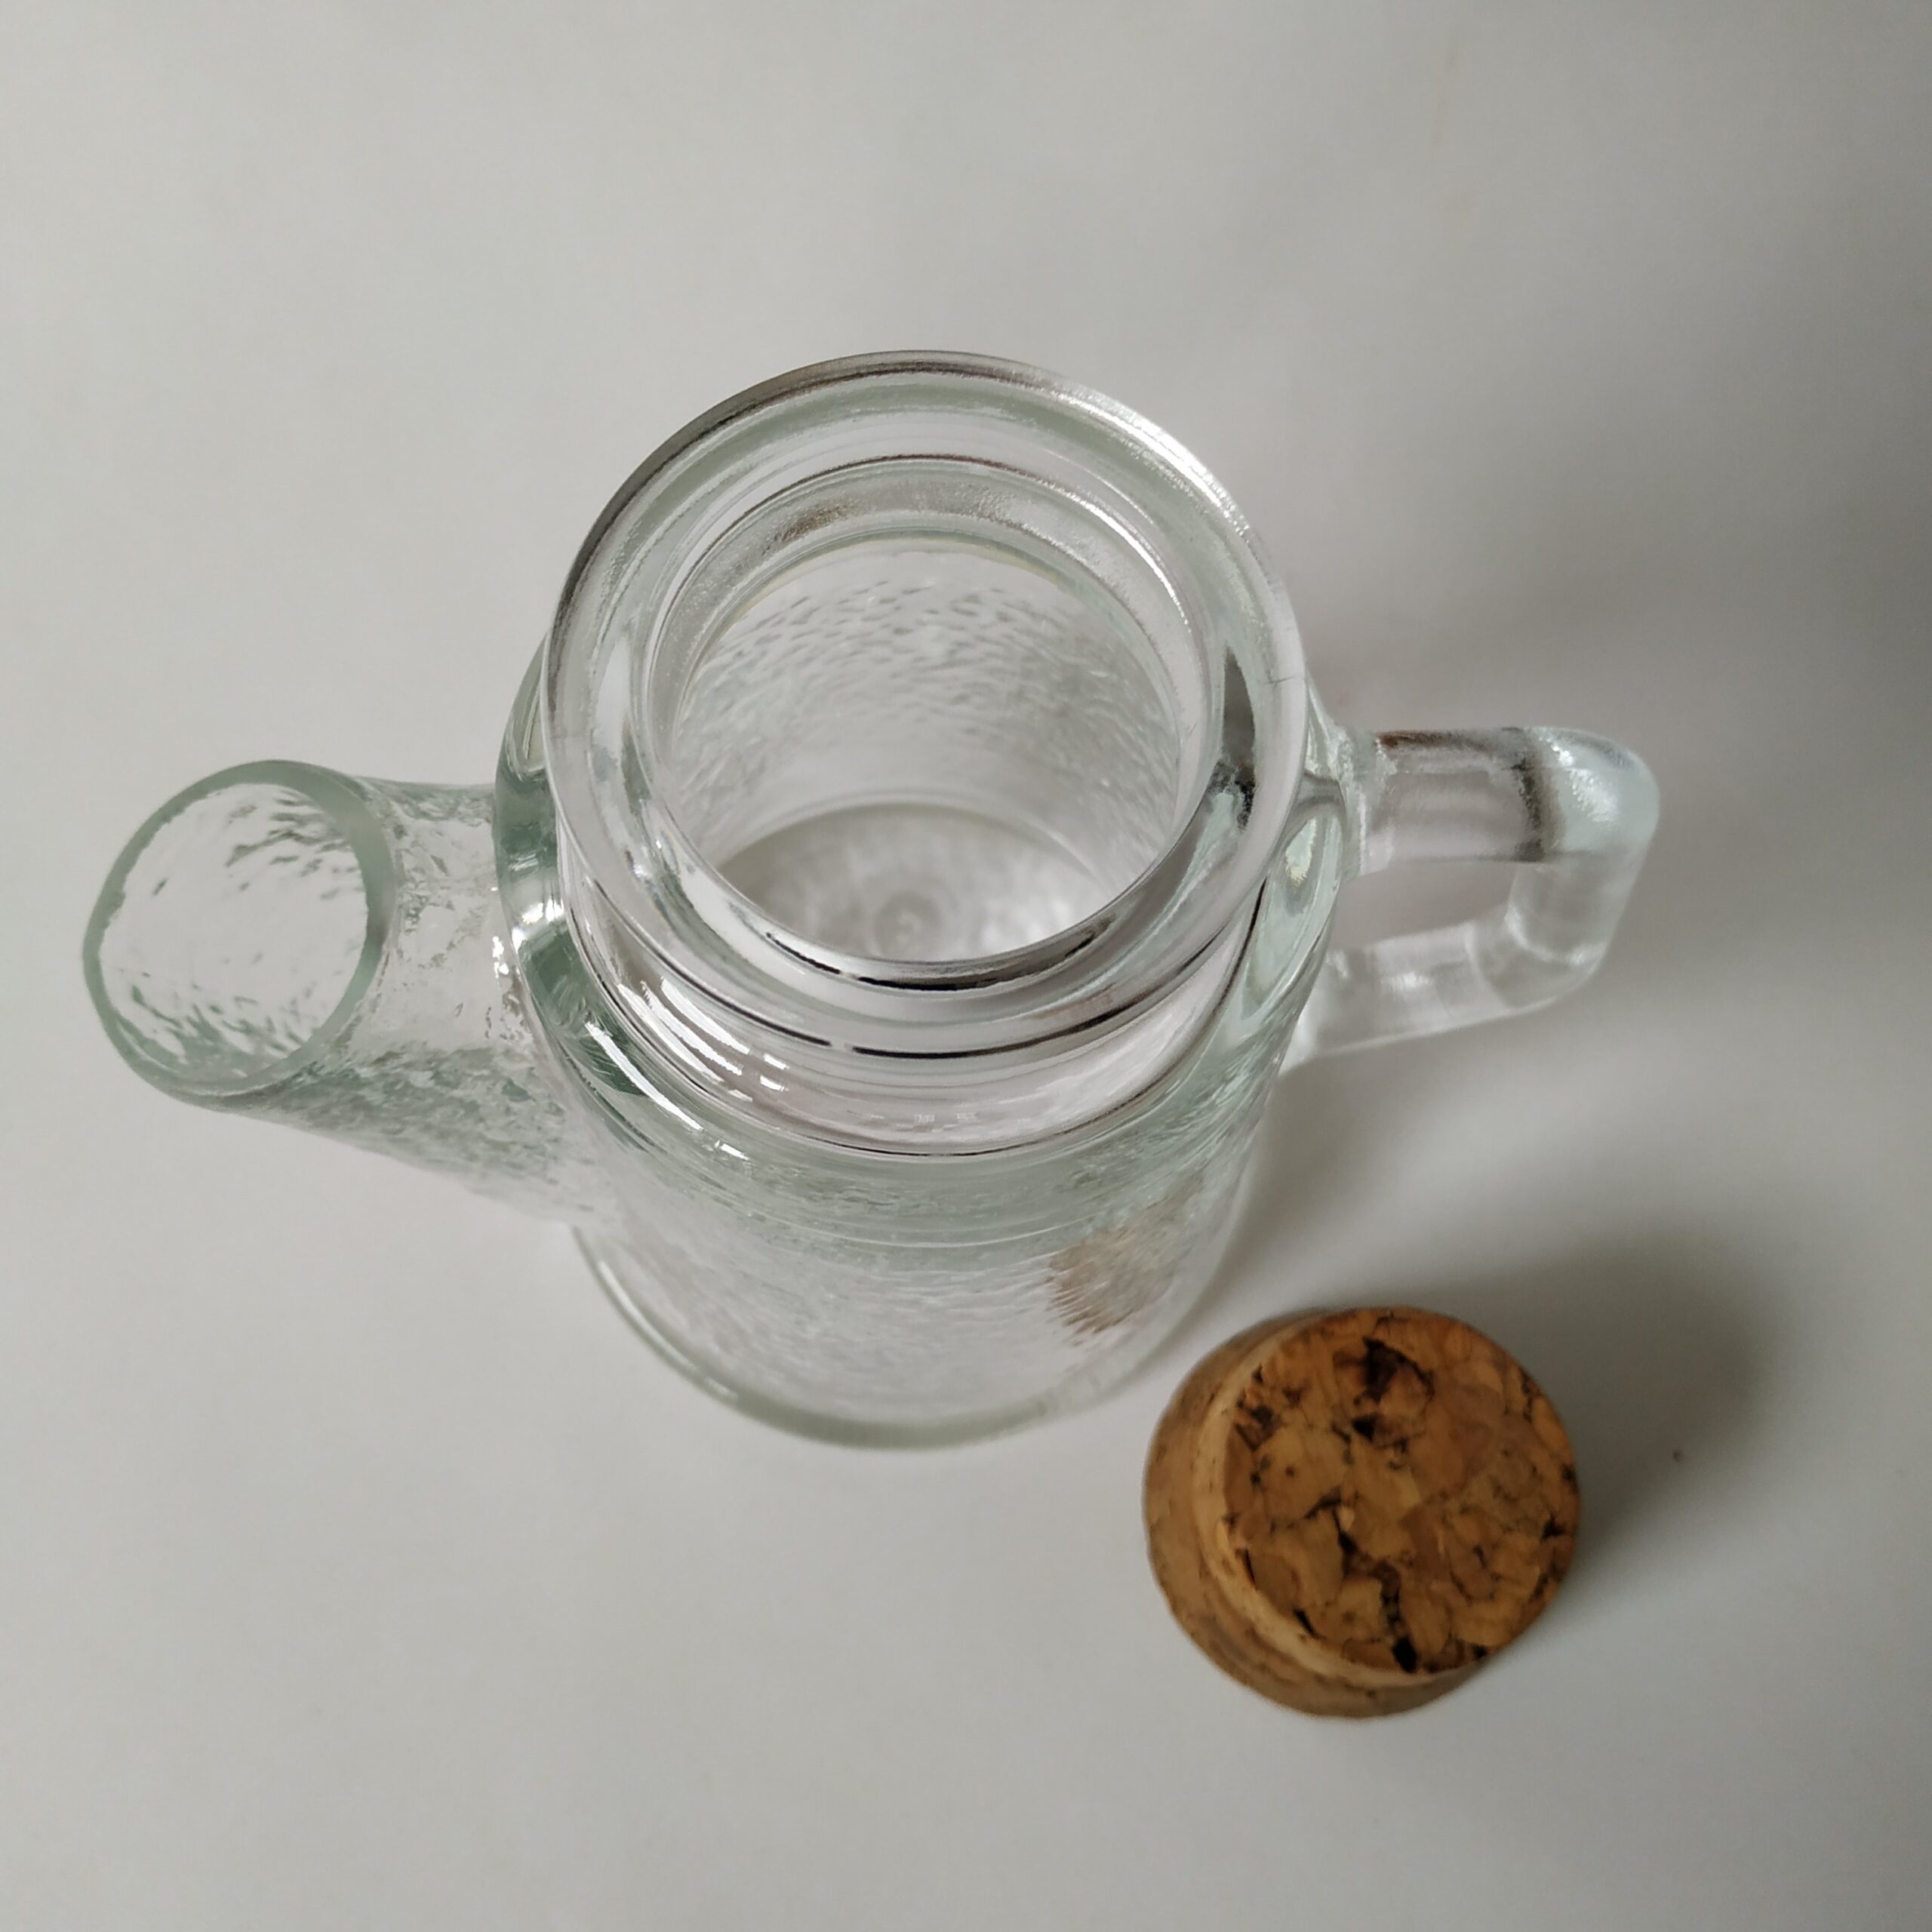 Pindastrooier van glas met kurken dop van WMF – hoogte is 14 cm (2)